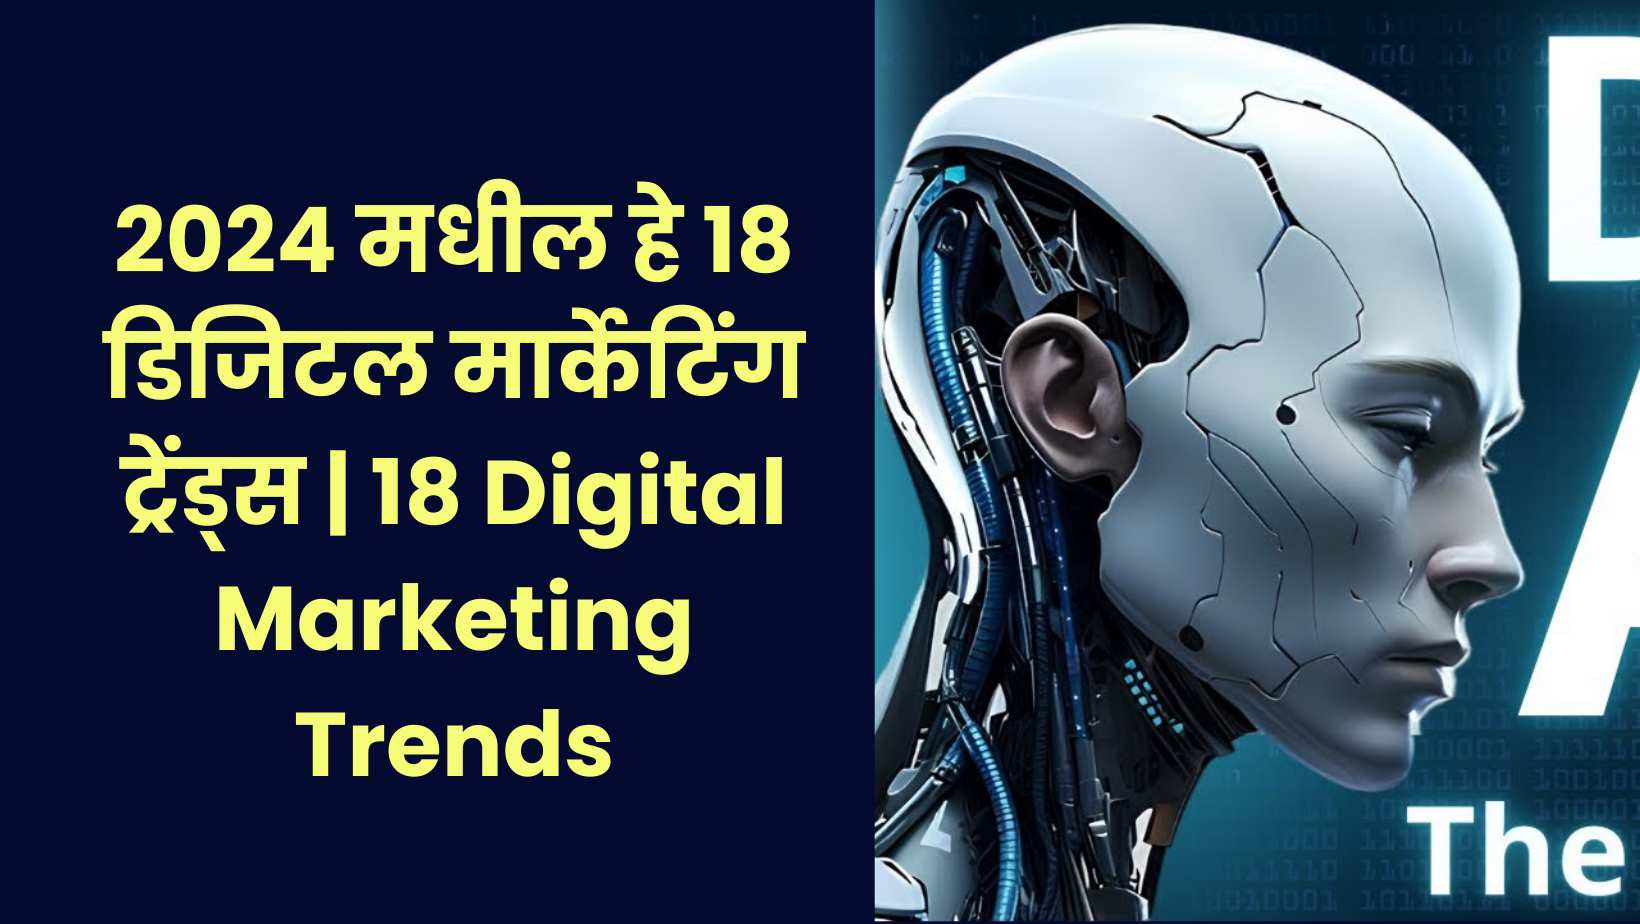 You are currently viewing 2024 मधील हे १८ डिजिटल मार्केटिंग ट्रेंड्स | 18 Digital Marketing Trends